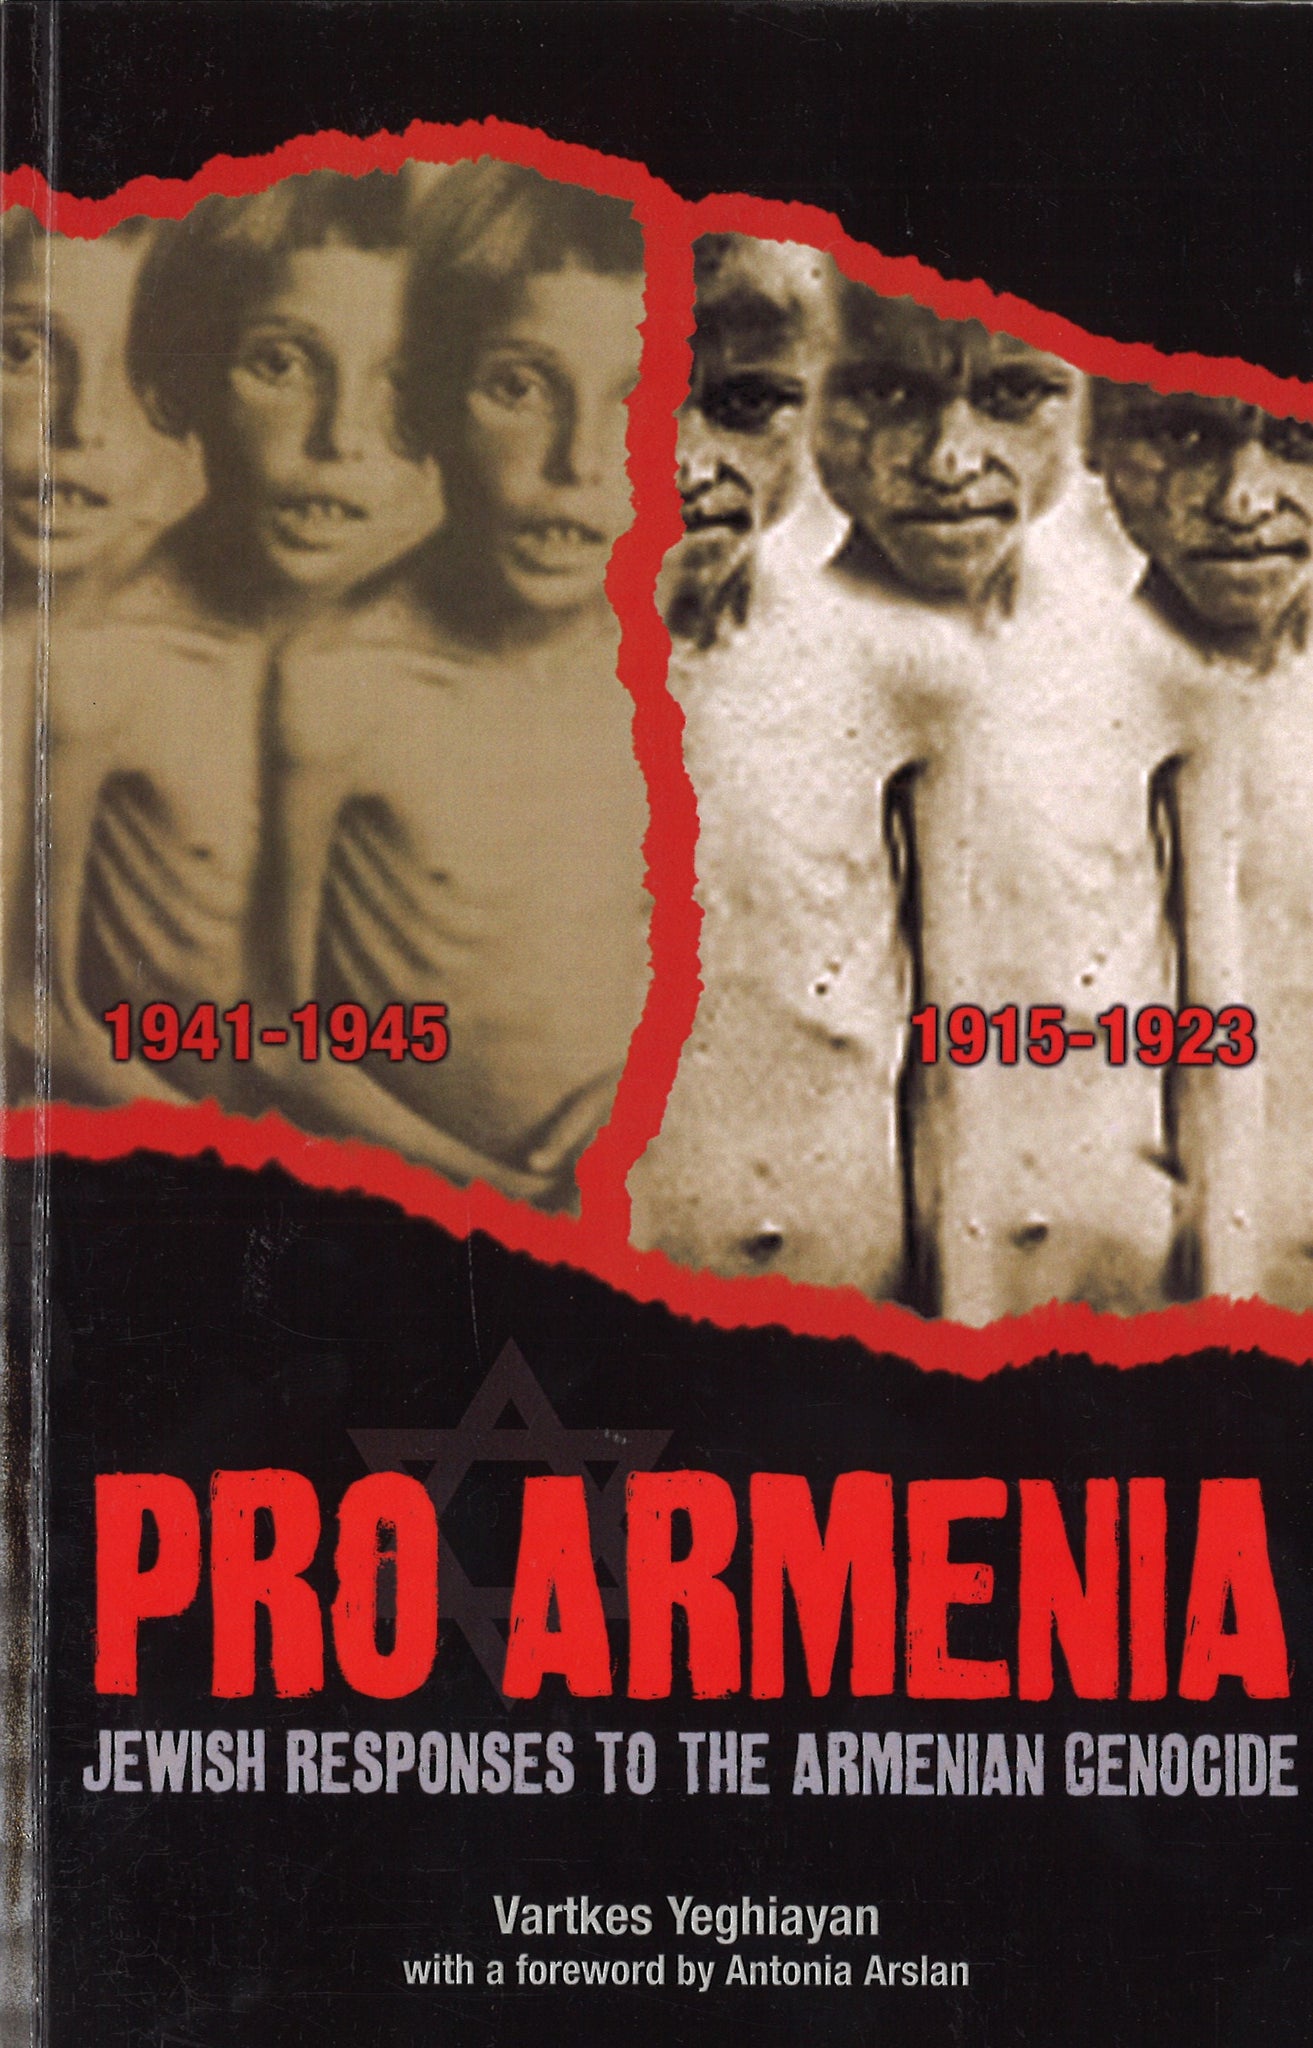 PRO ARMENIA: JEWISH RESPONSES TO THE ARMENIAN GENOCIDE